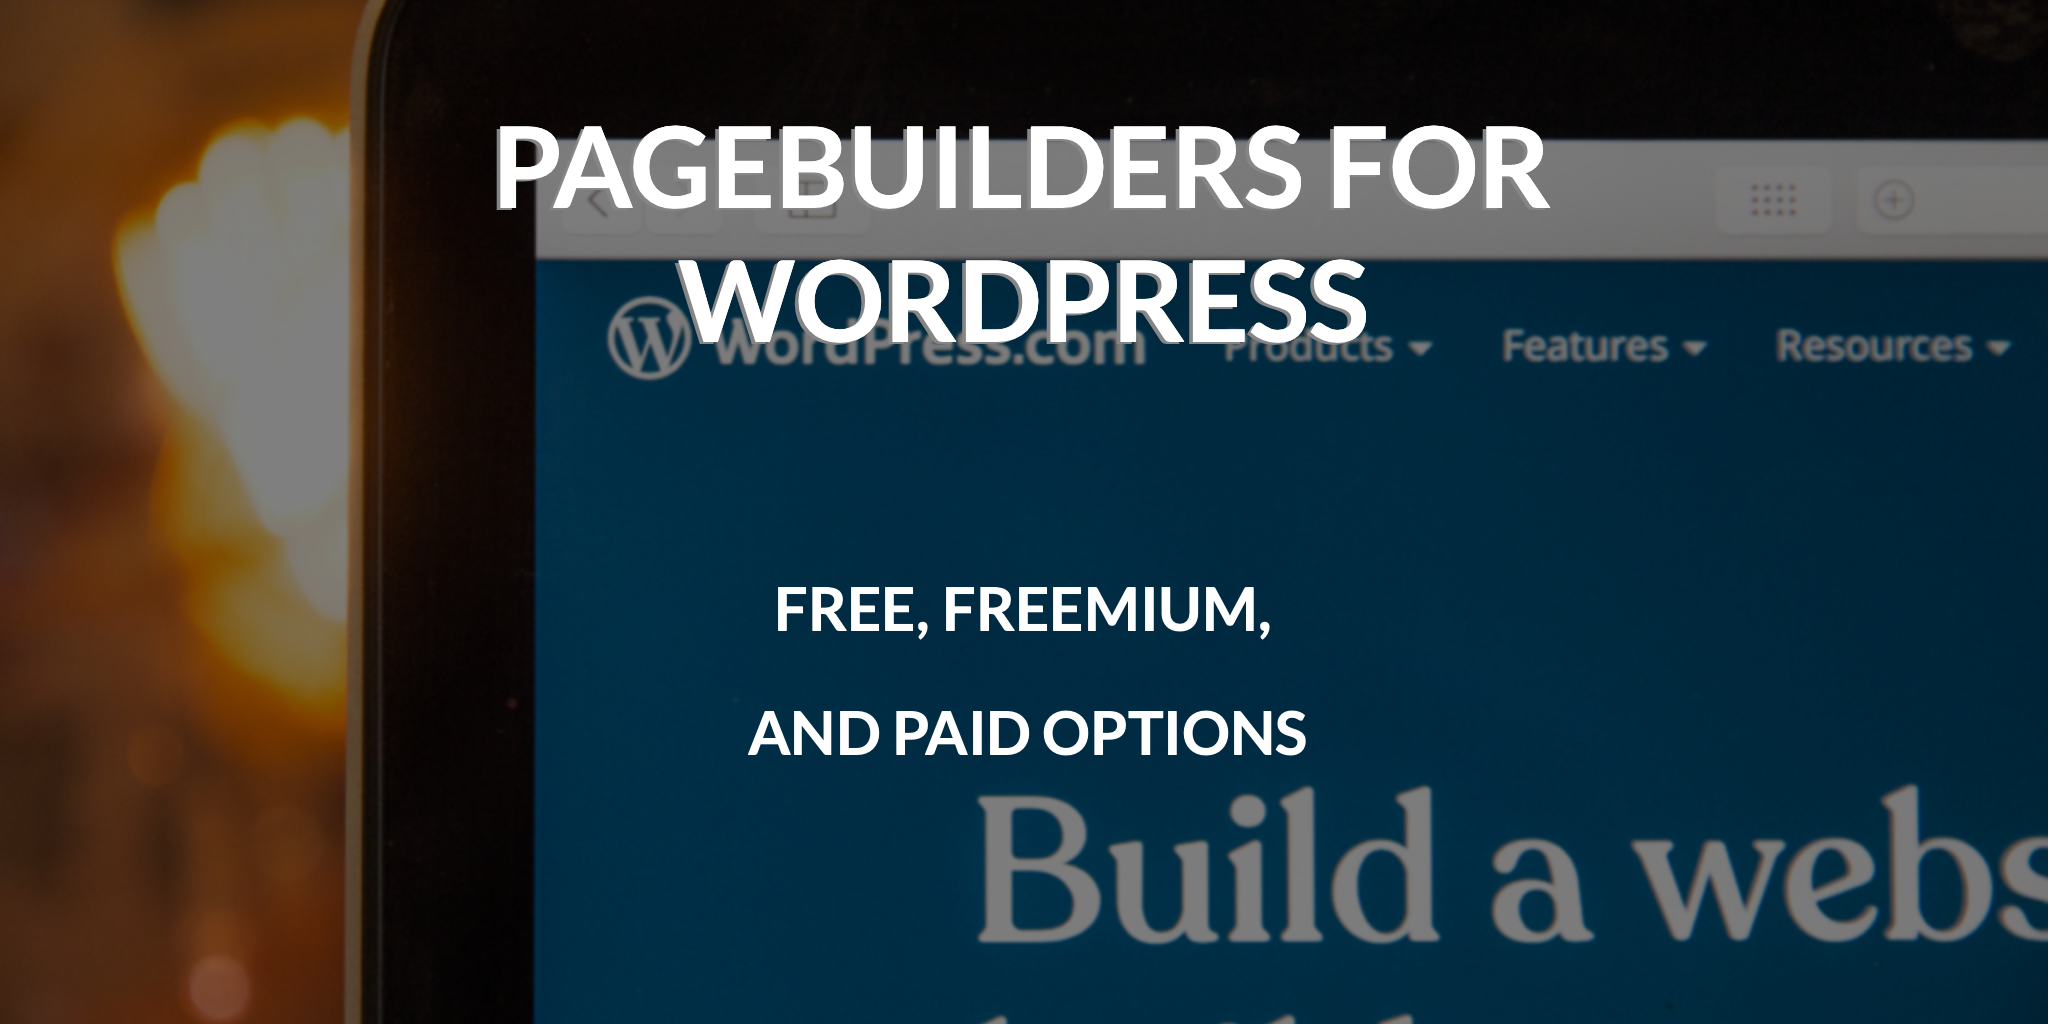 Image showing pagebuilders for WordPress. LowEndSpirit Blog